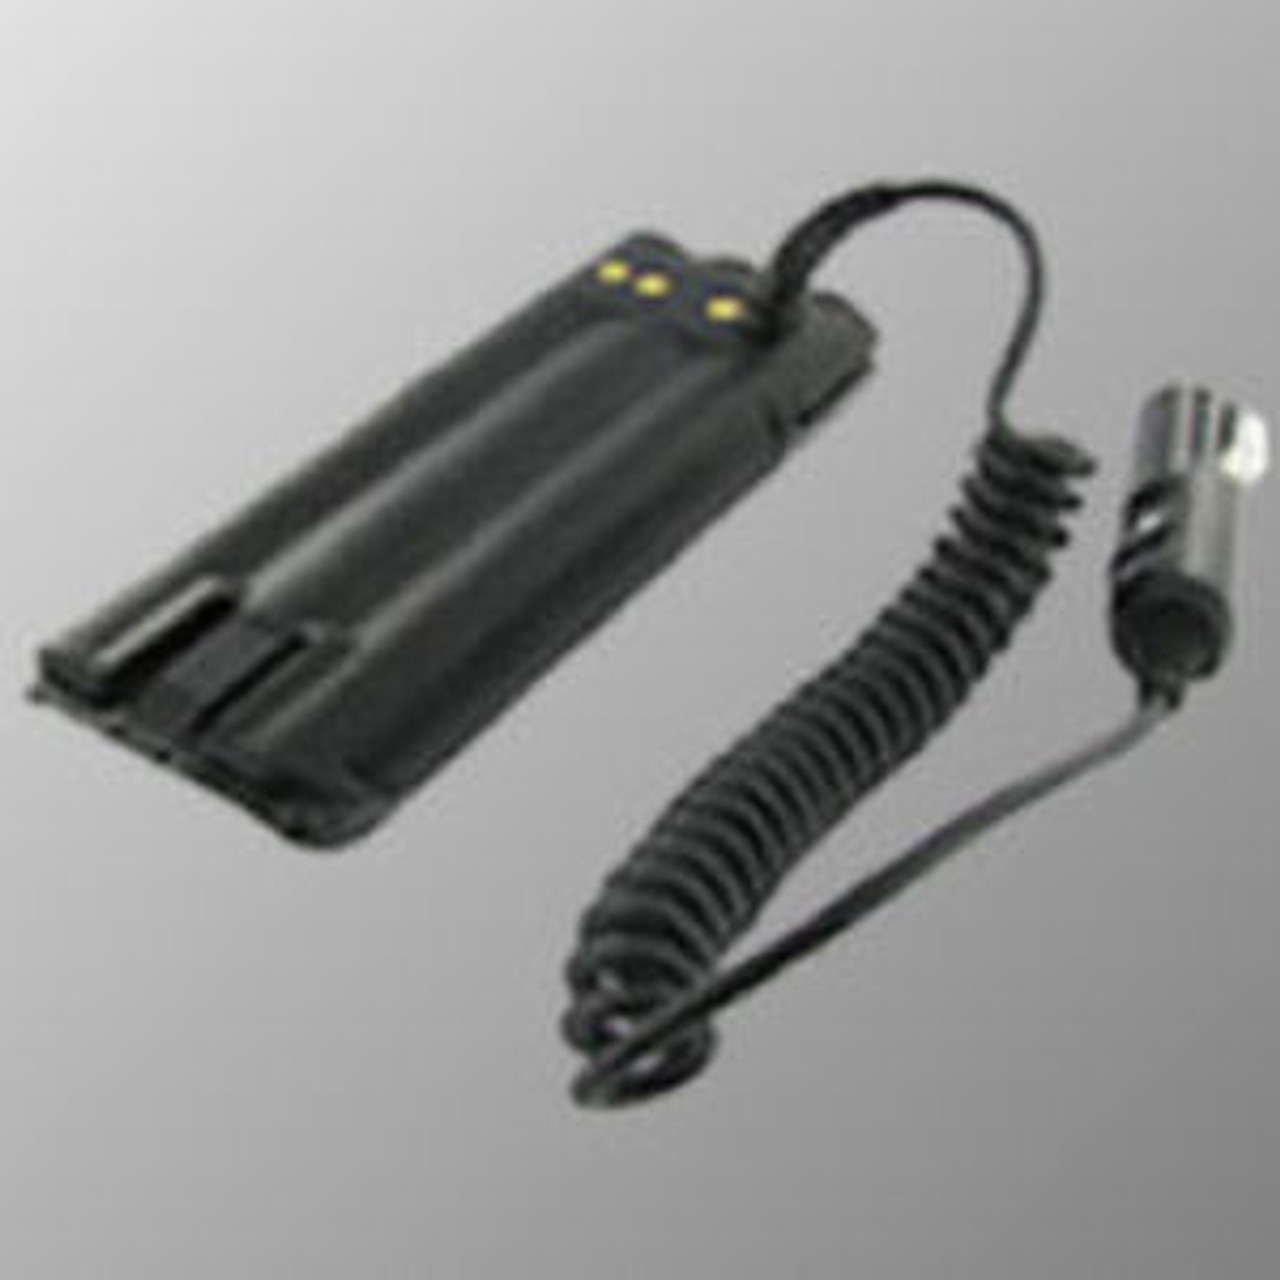 Motorola ASTRO XTS5000 Battery Eliminator - 12VDC Cig Plug